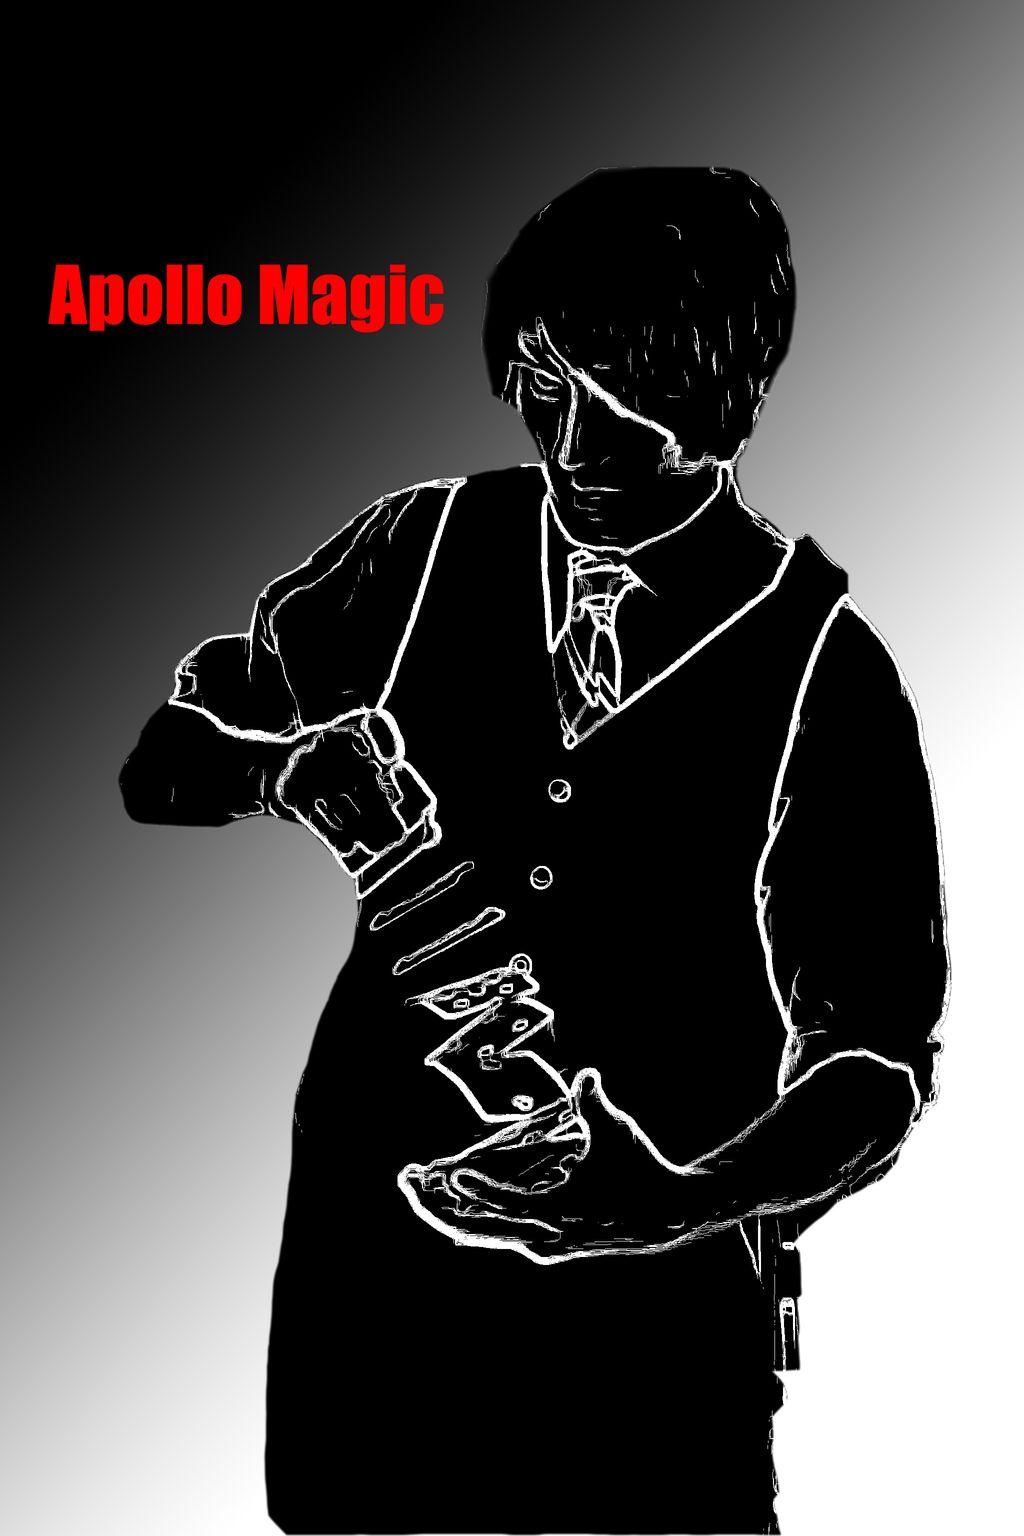 Apollo Magic